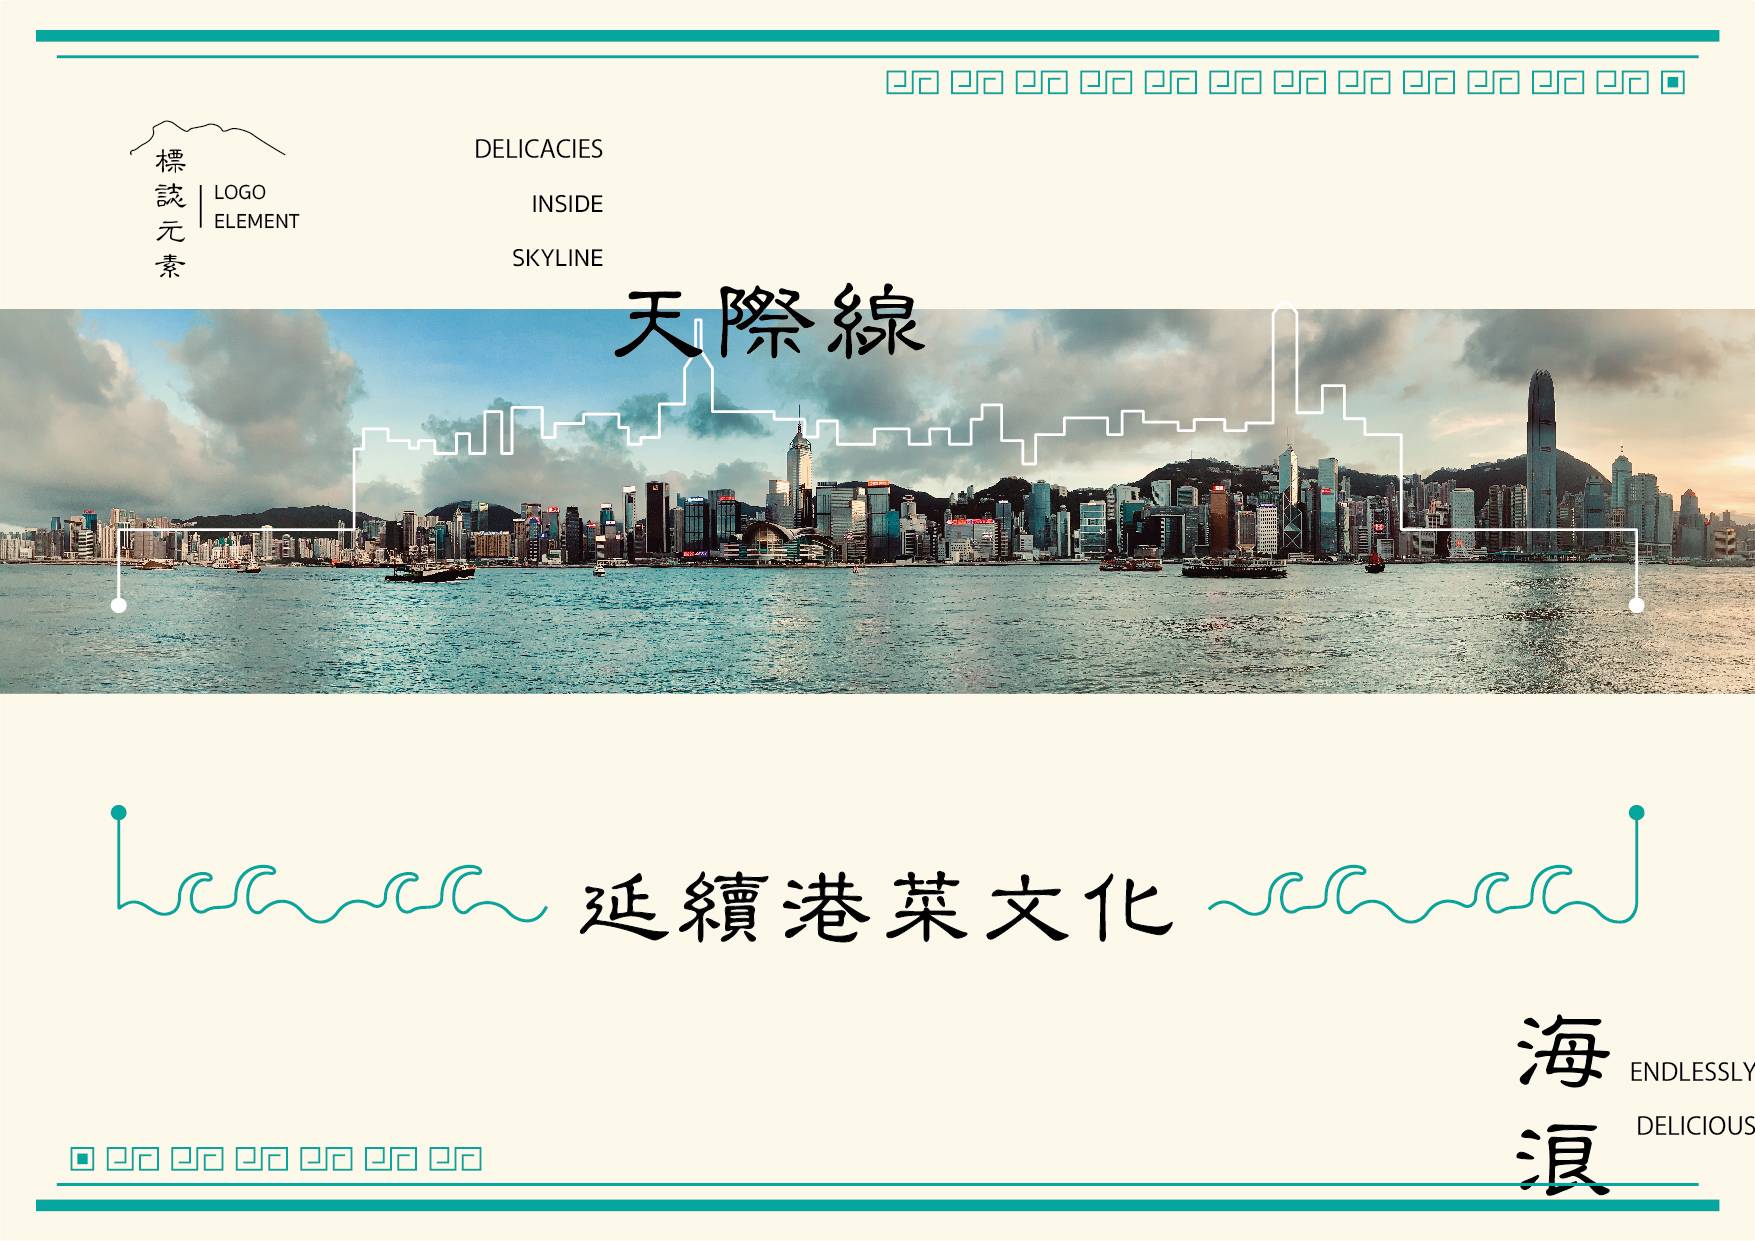  Hong Kong Delicacies rebranding for Victoria Harbour skyline